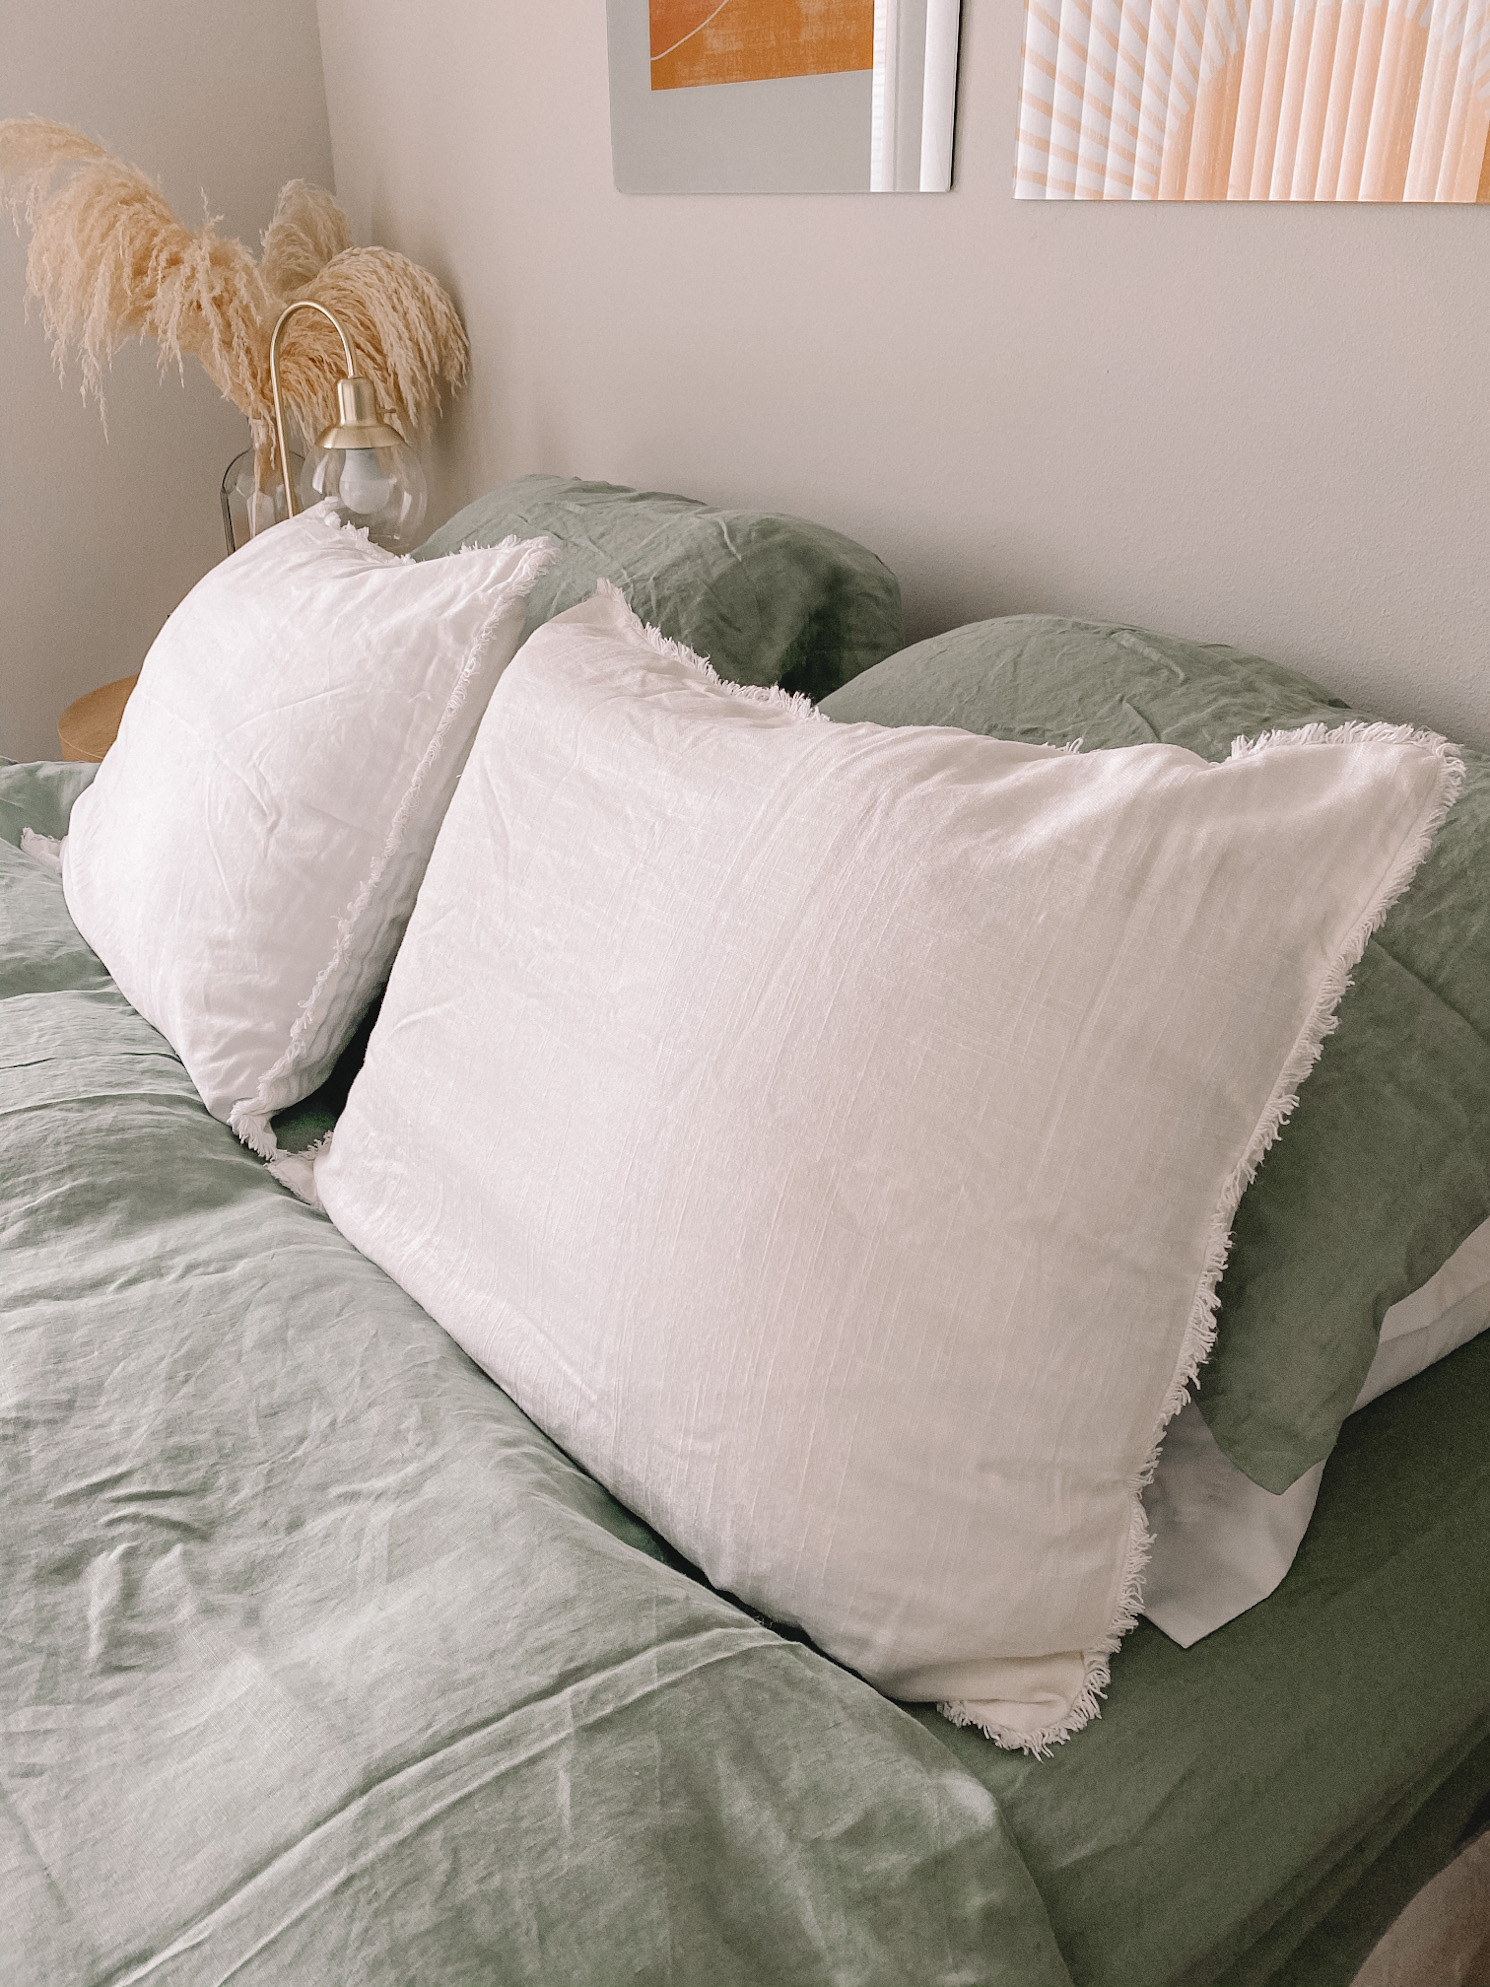 Best Linen Sheets - Casaluna Target Review - Gypsy Tan Home - Affordable Linen Duvet